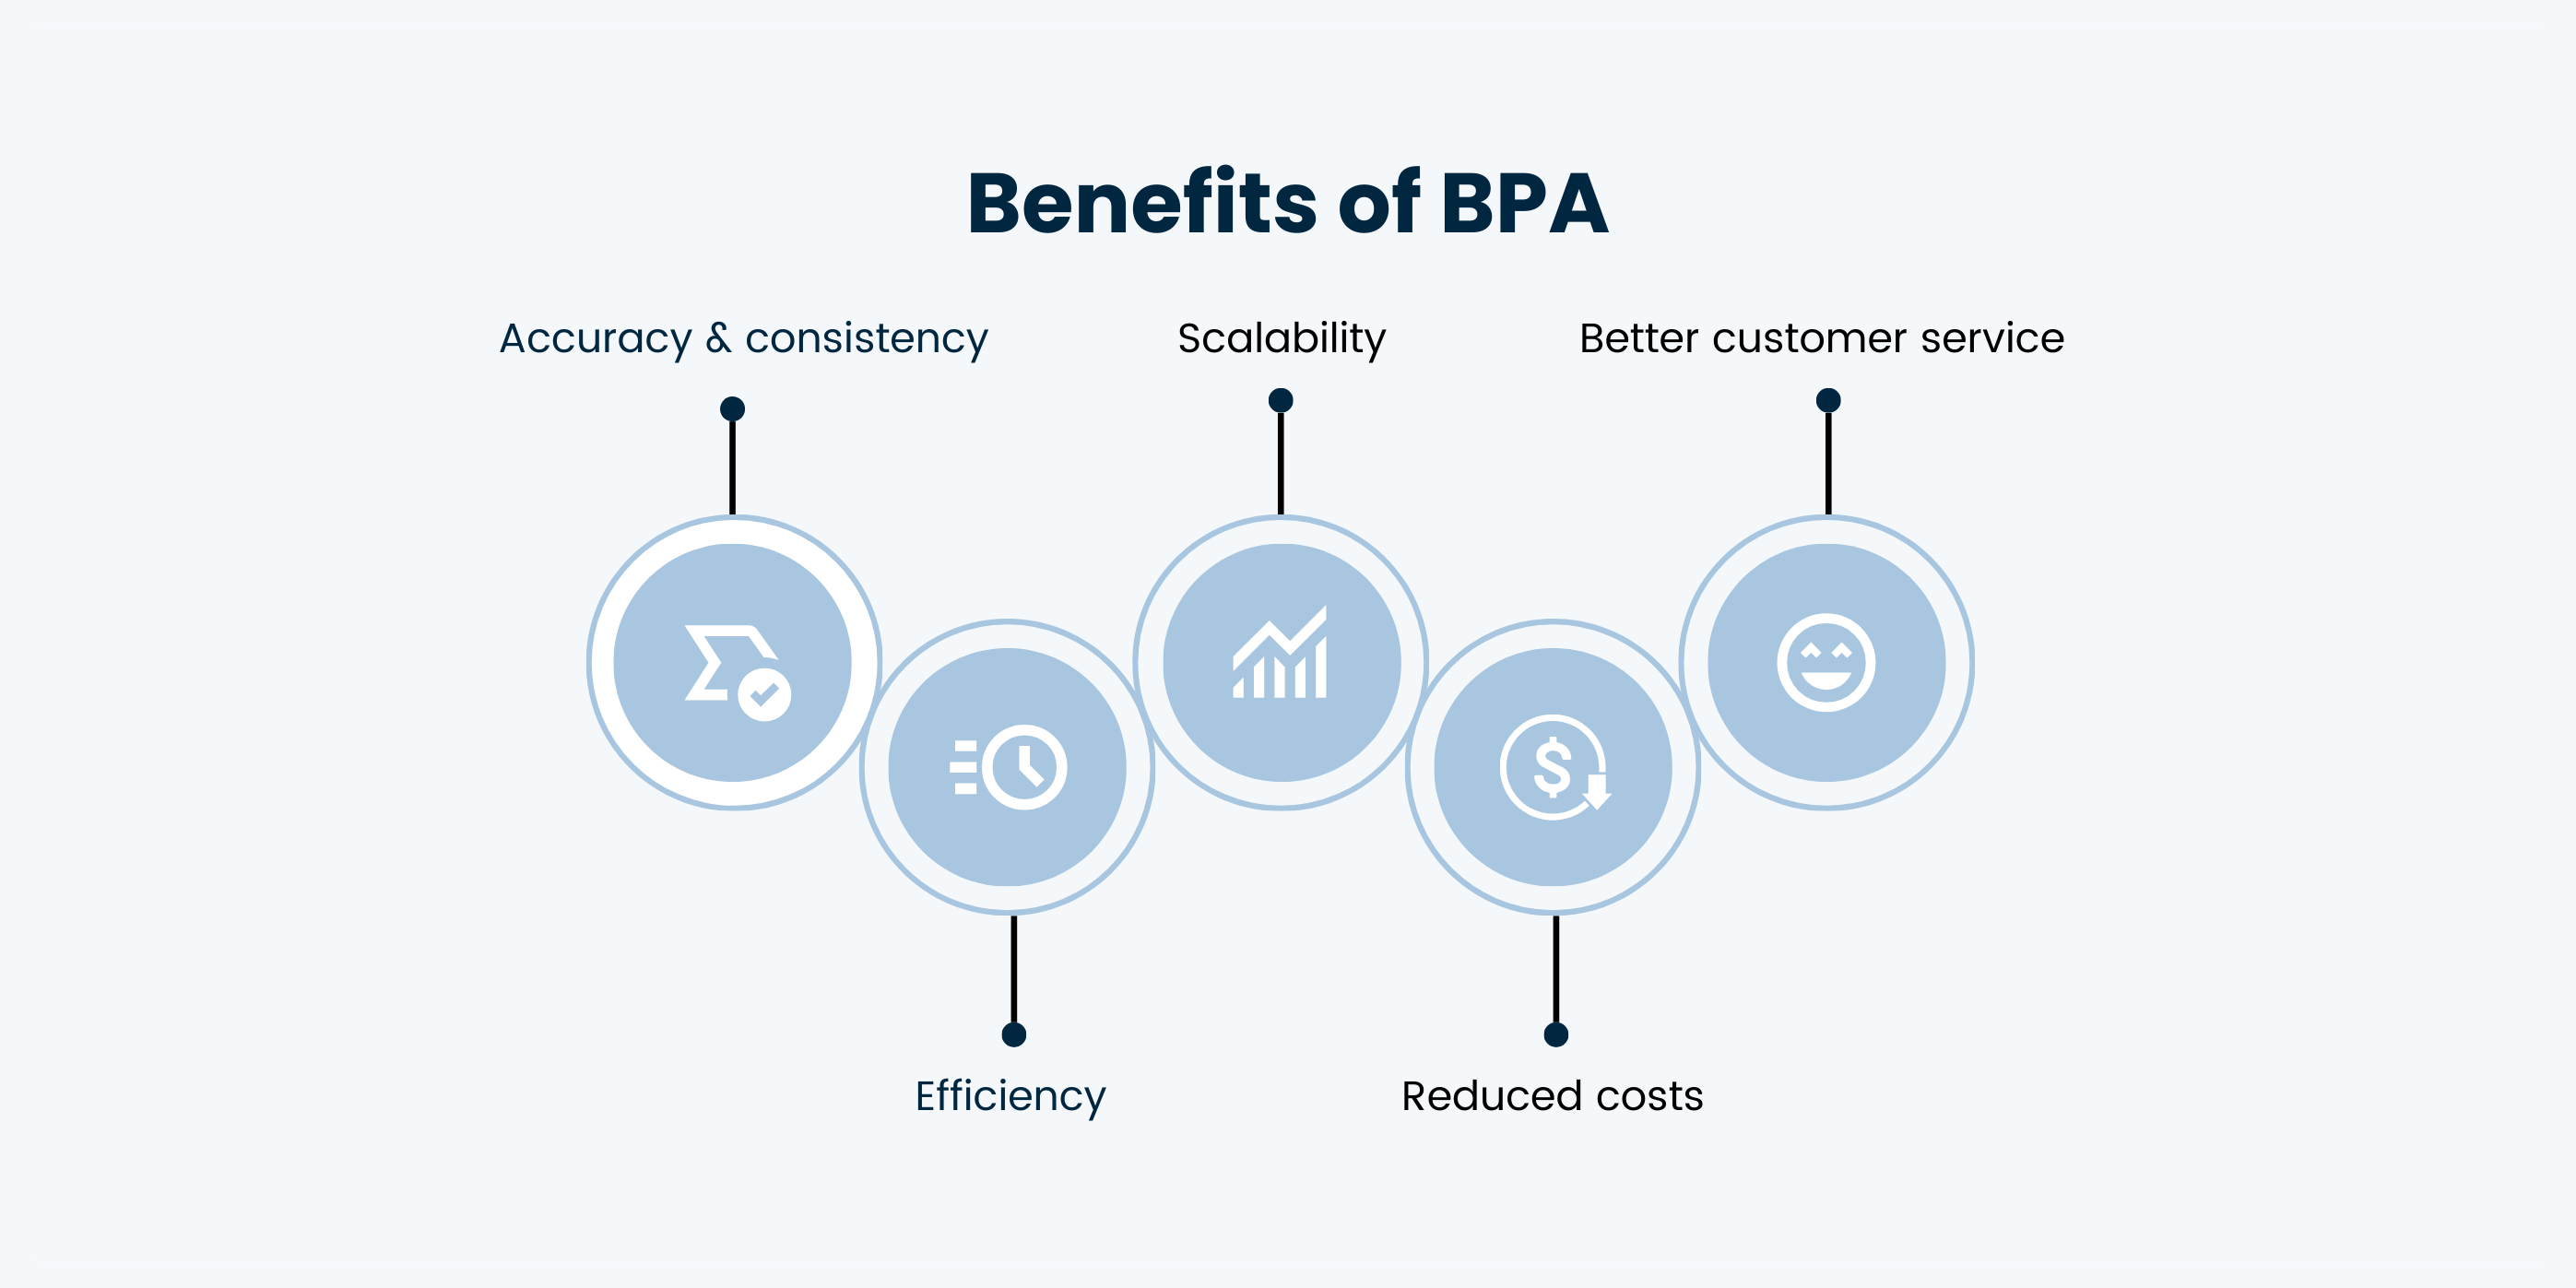 Benefits of BPA